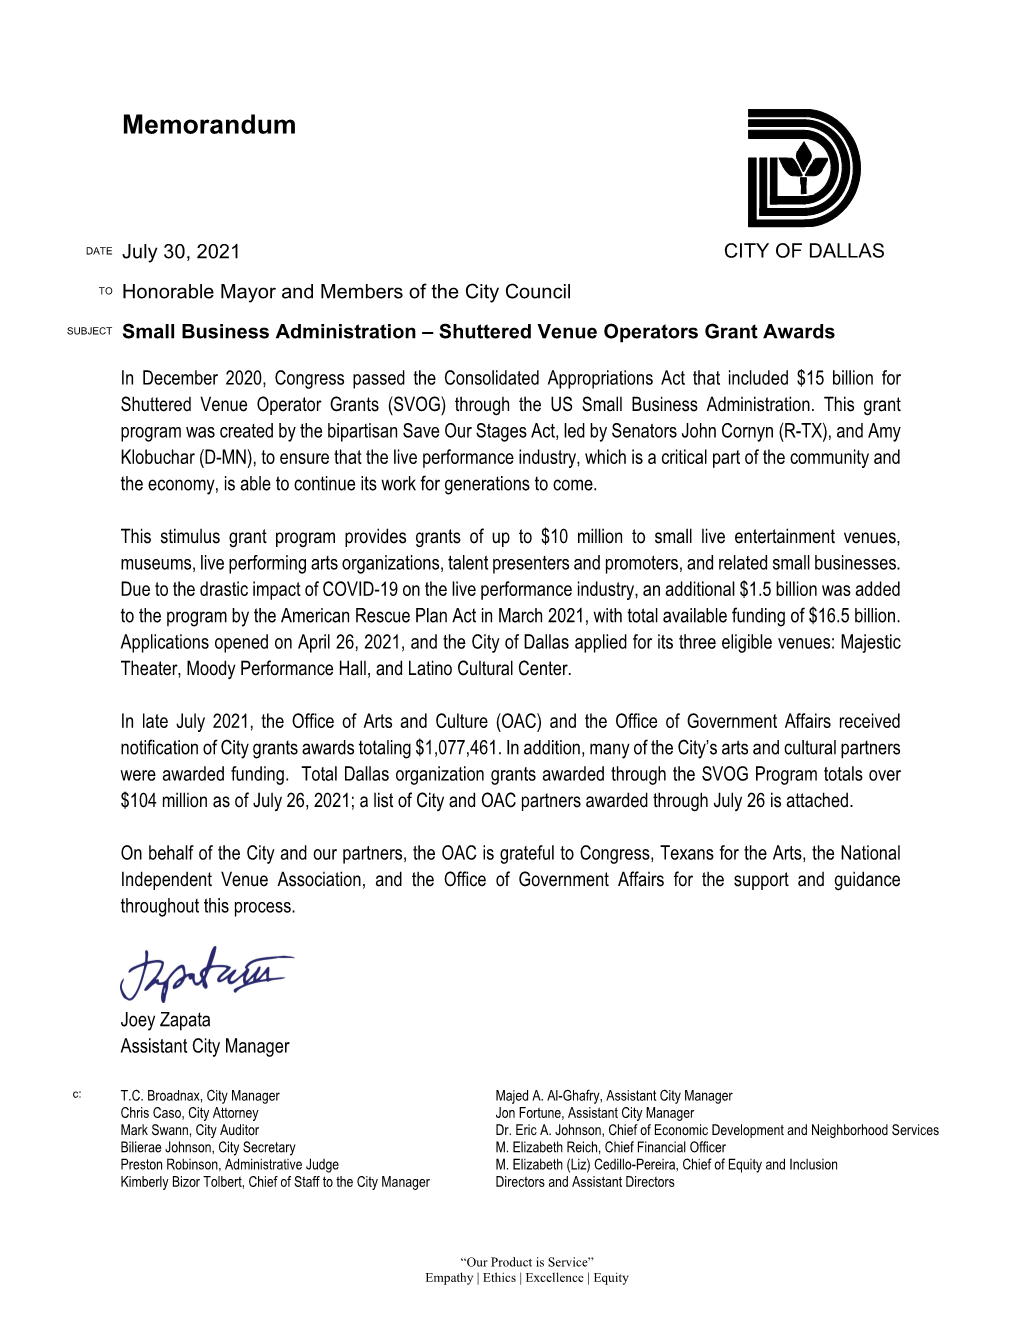 Shuttered Venue Operators Grant Awards